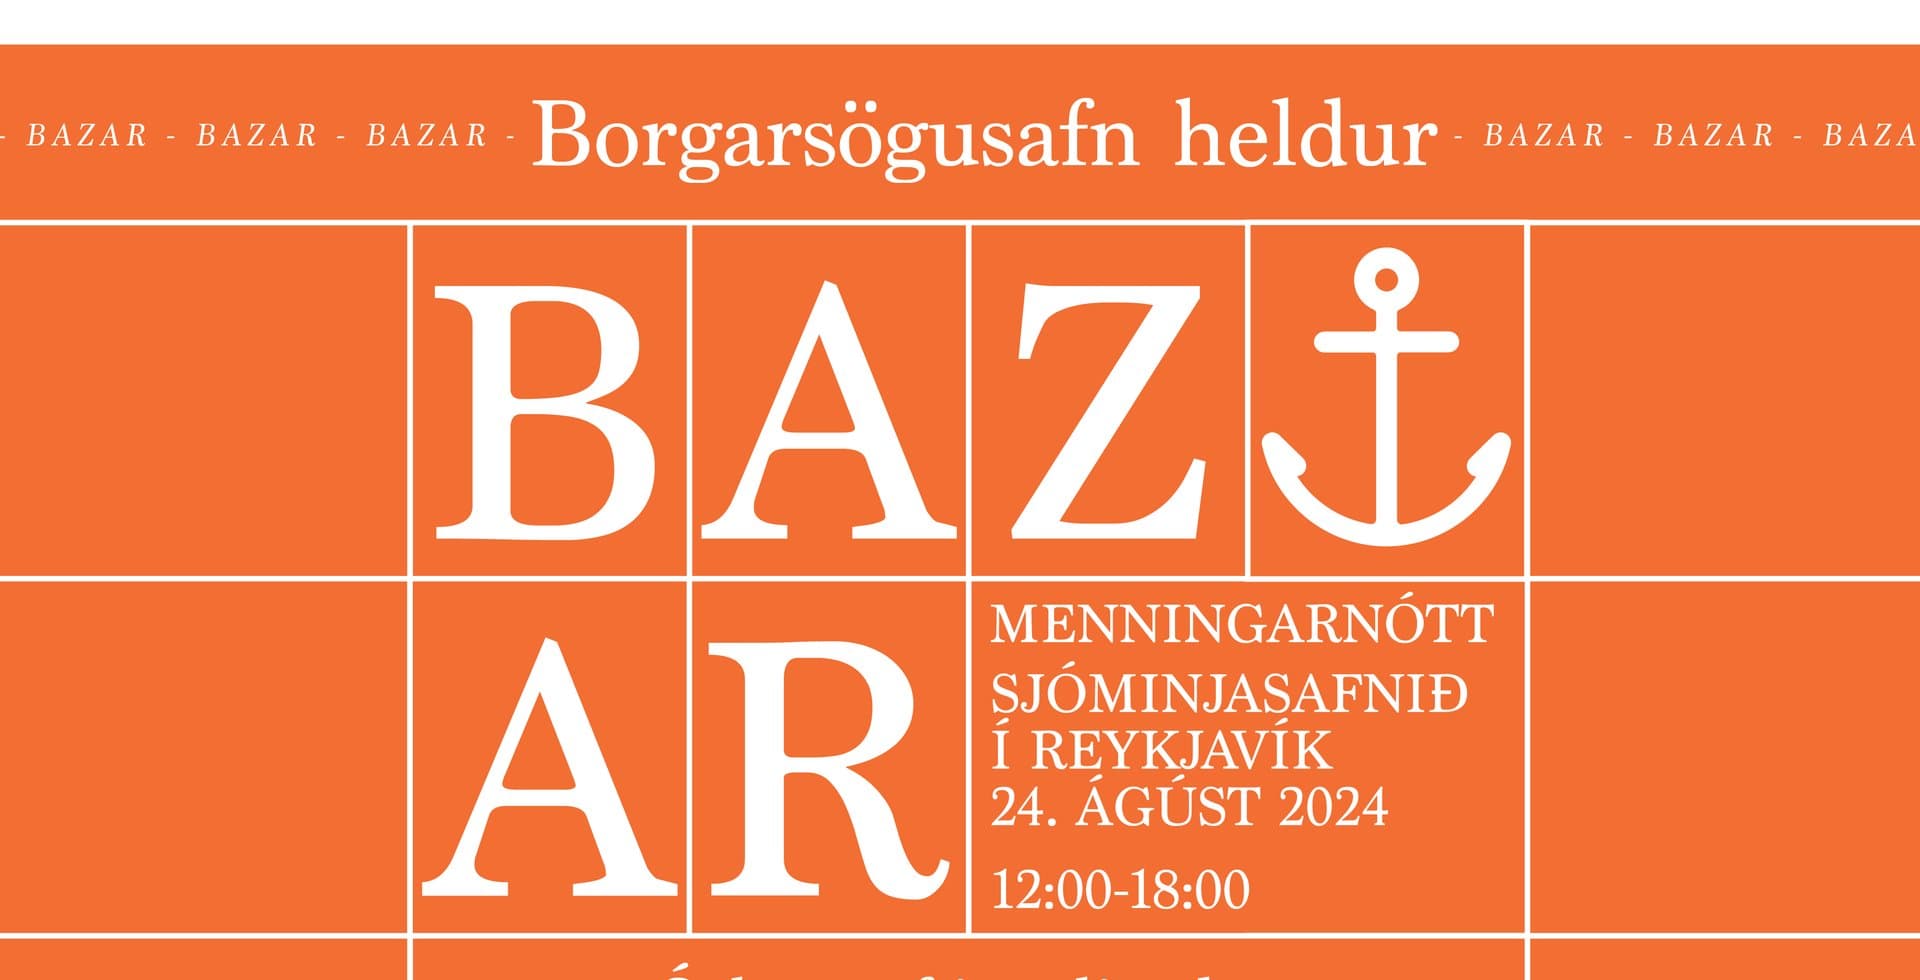 BAZAAR at the Reykjavík Maritime Museum